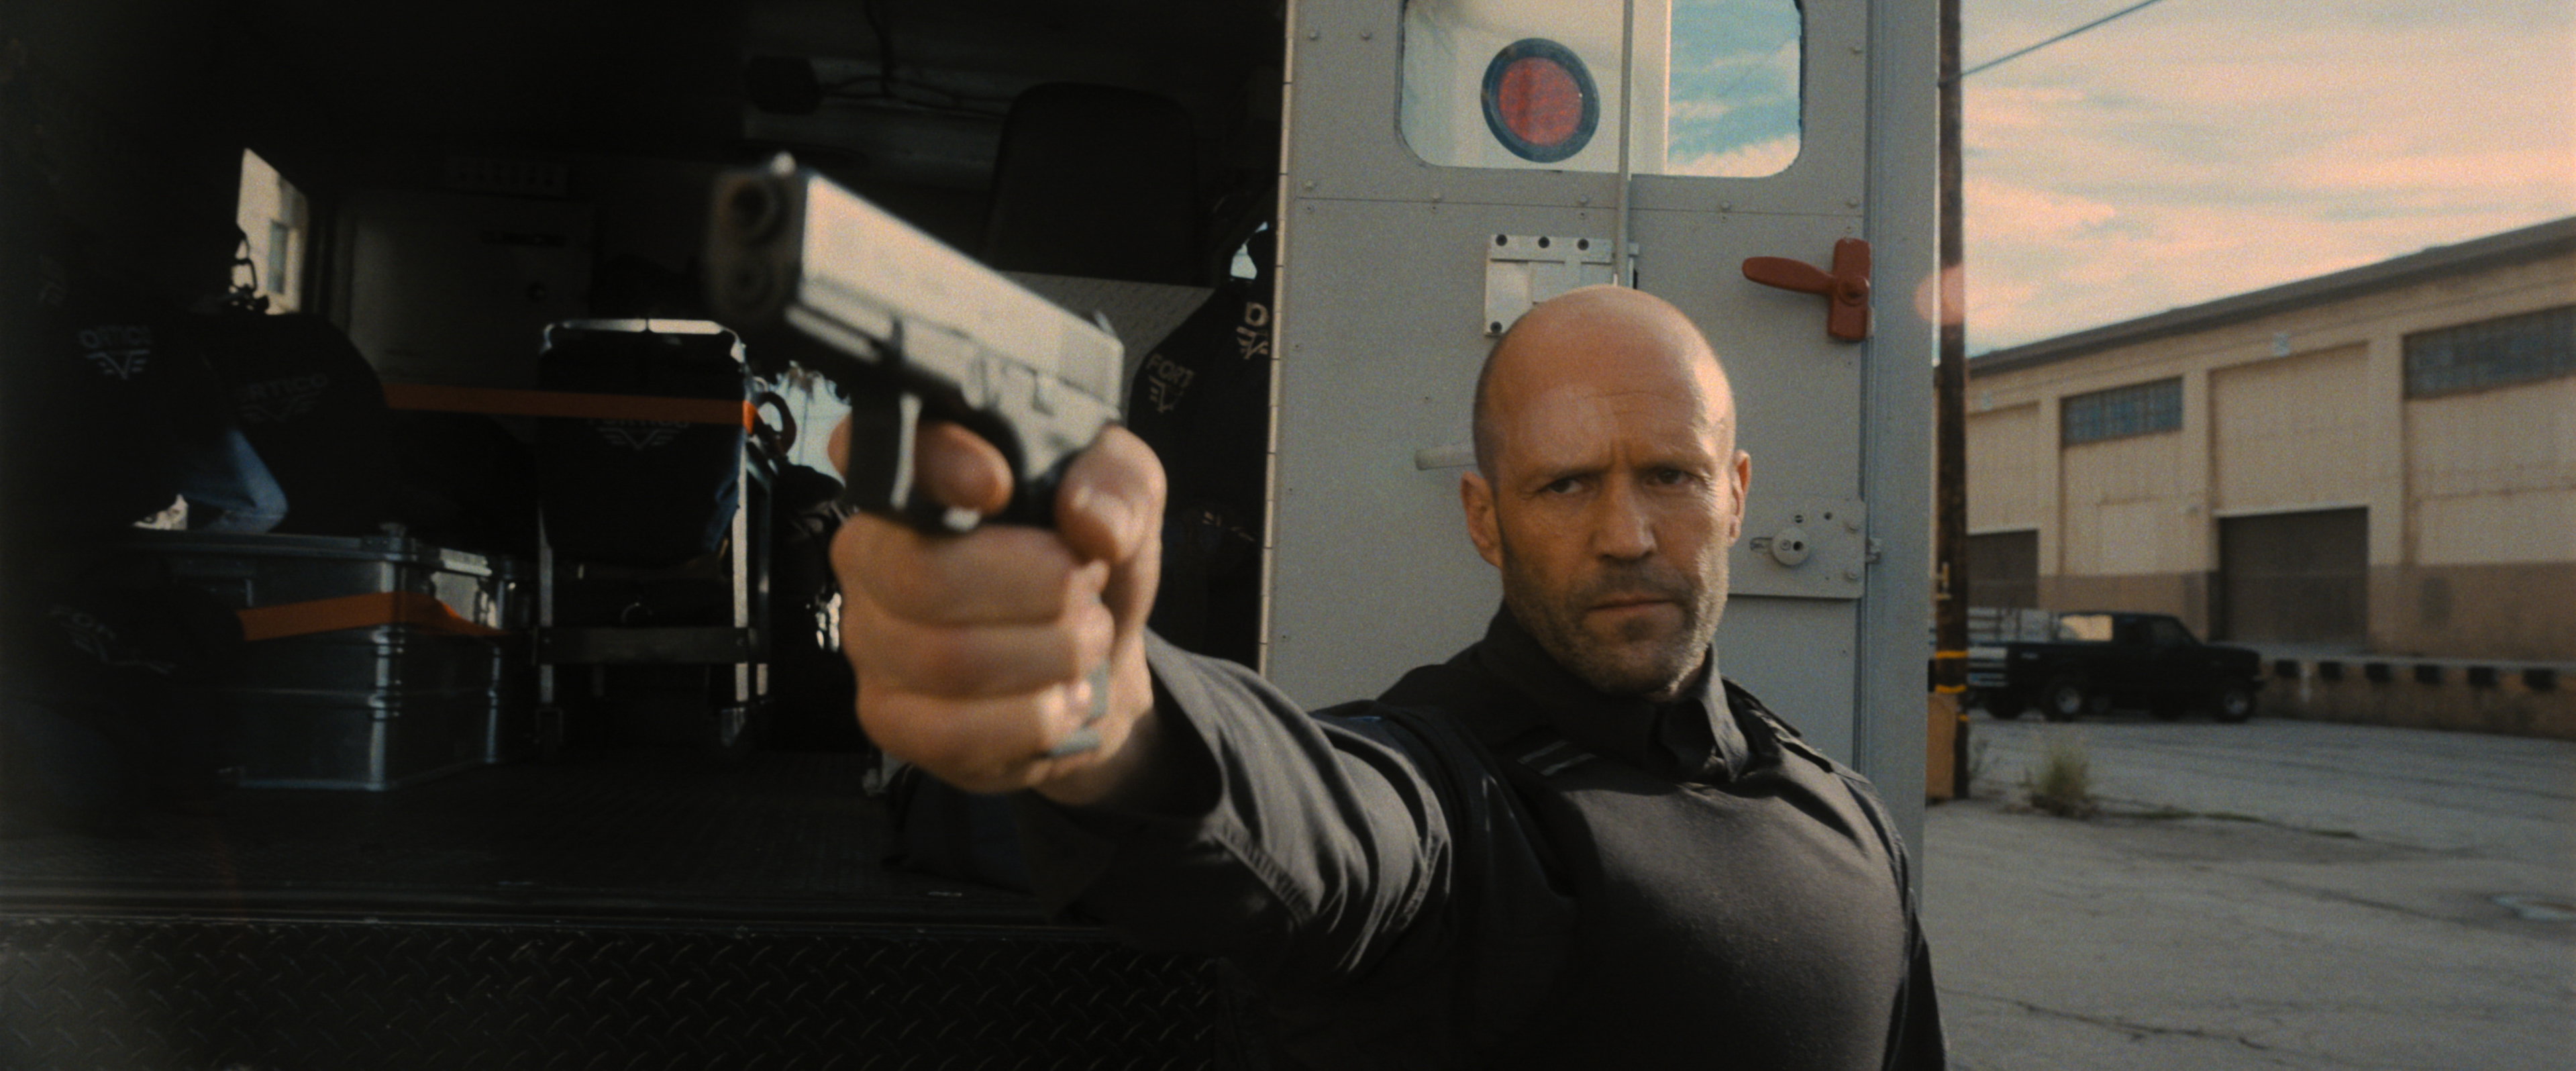 Wrath of Man star Jason Statham points a gun